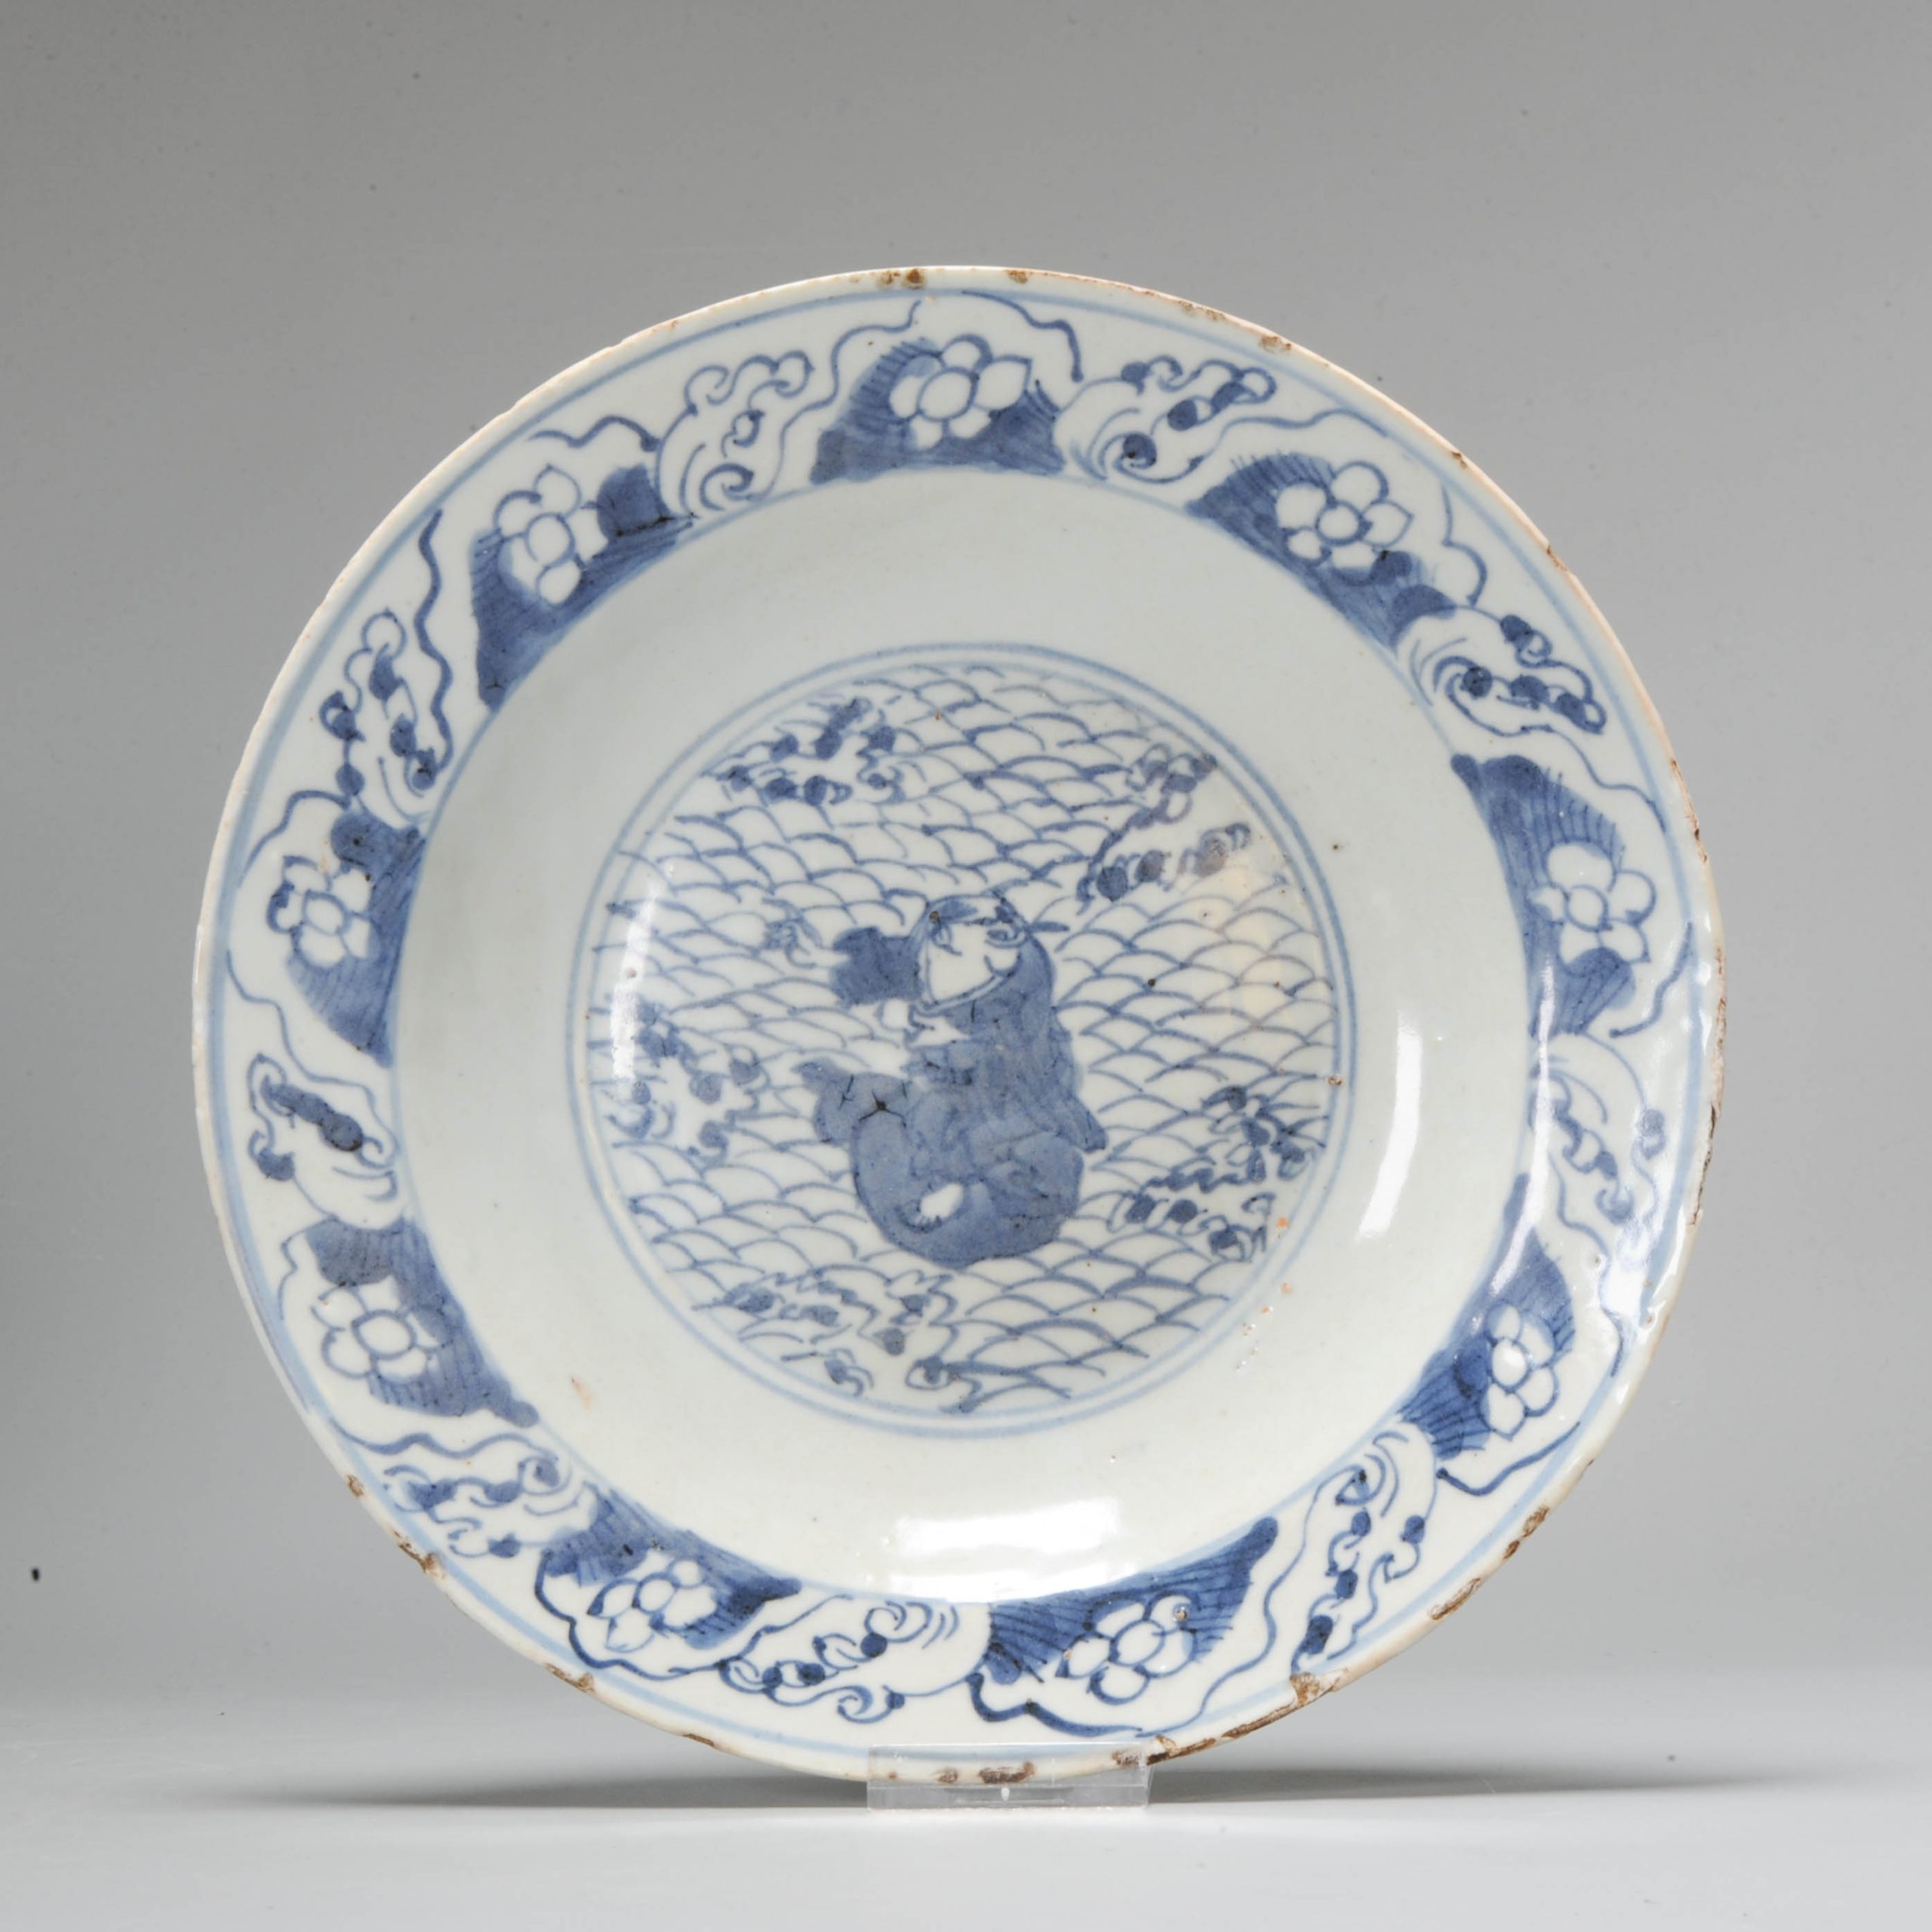 Liu Hai Kosometsuke Antique Chinese 16/17c Ming Dynasty Plate China Porcelain Blue and White